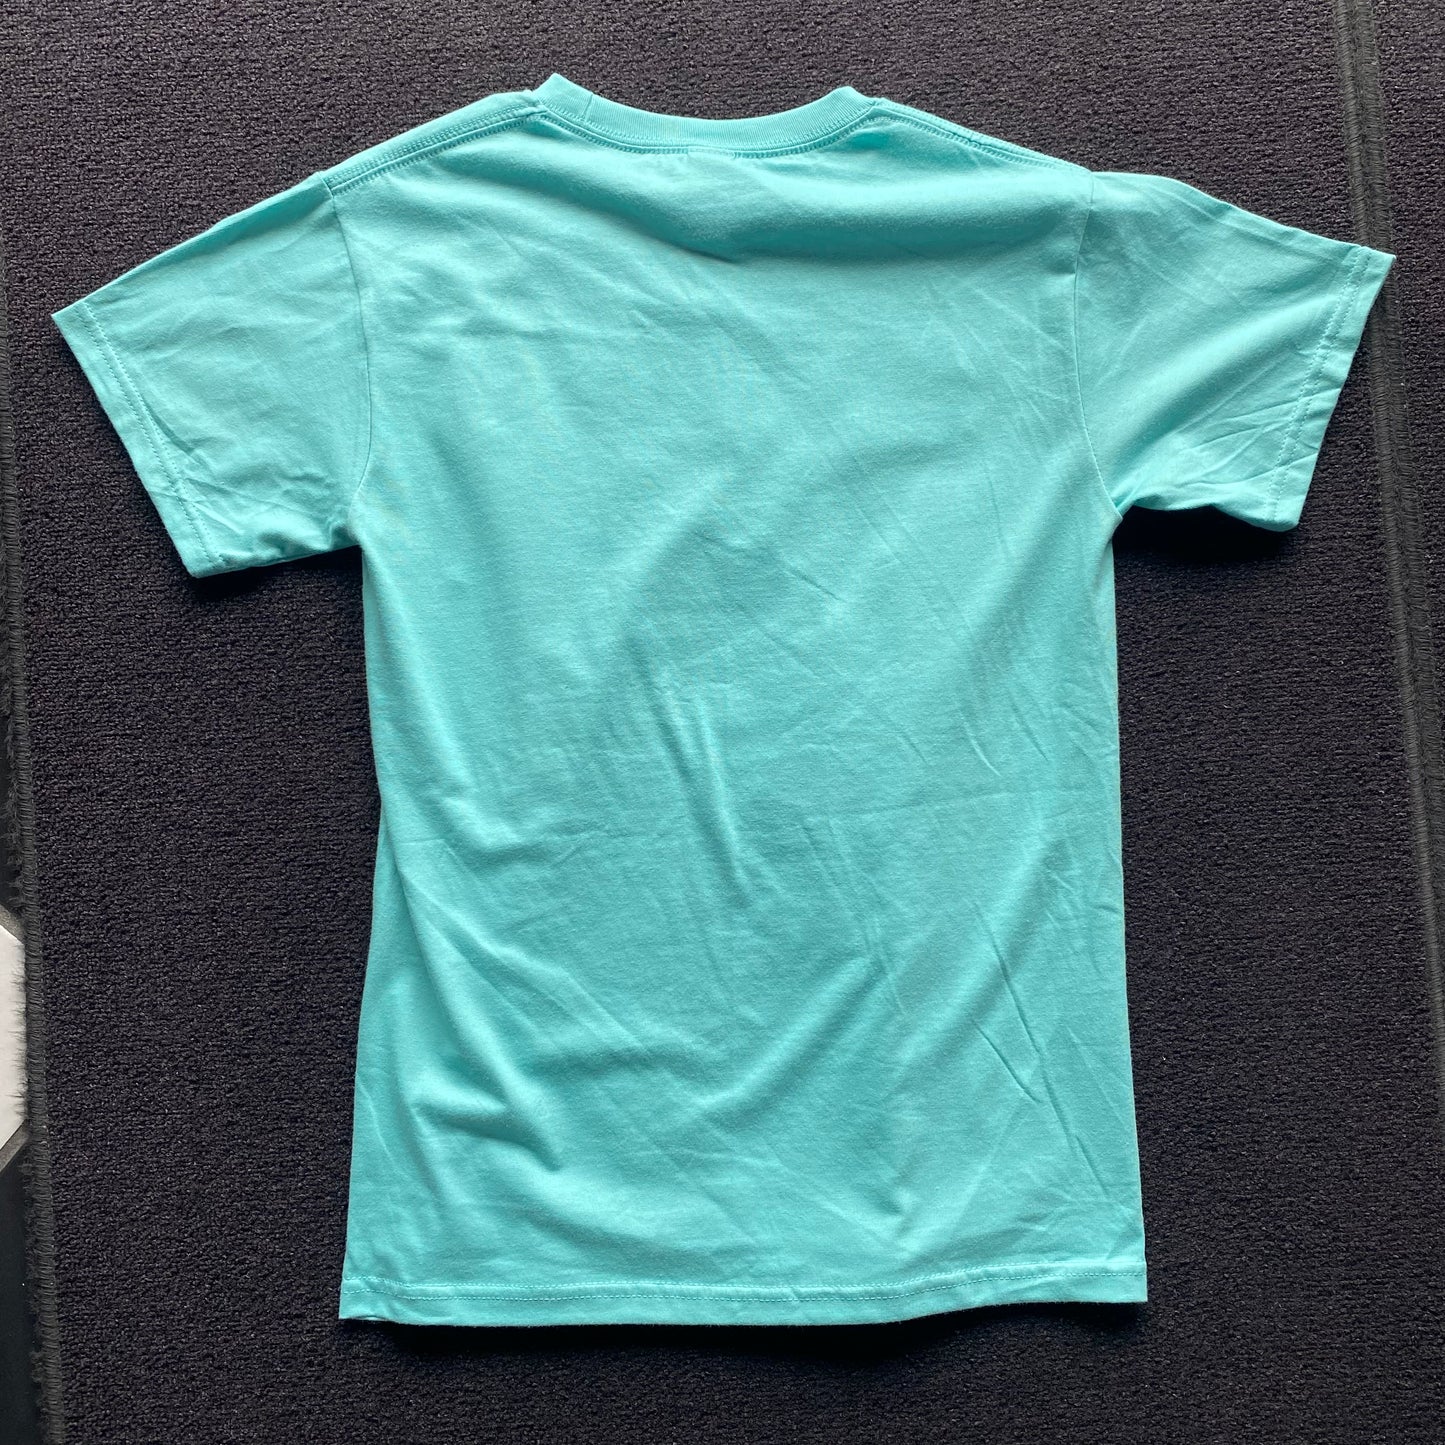 No Limits - Teal Puff Print T Shirt